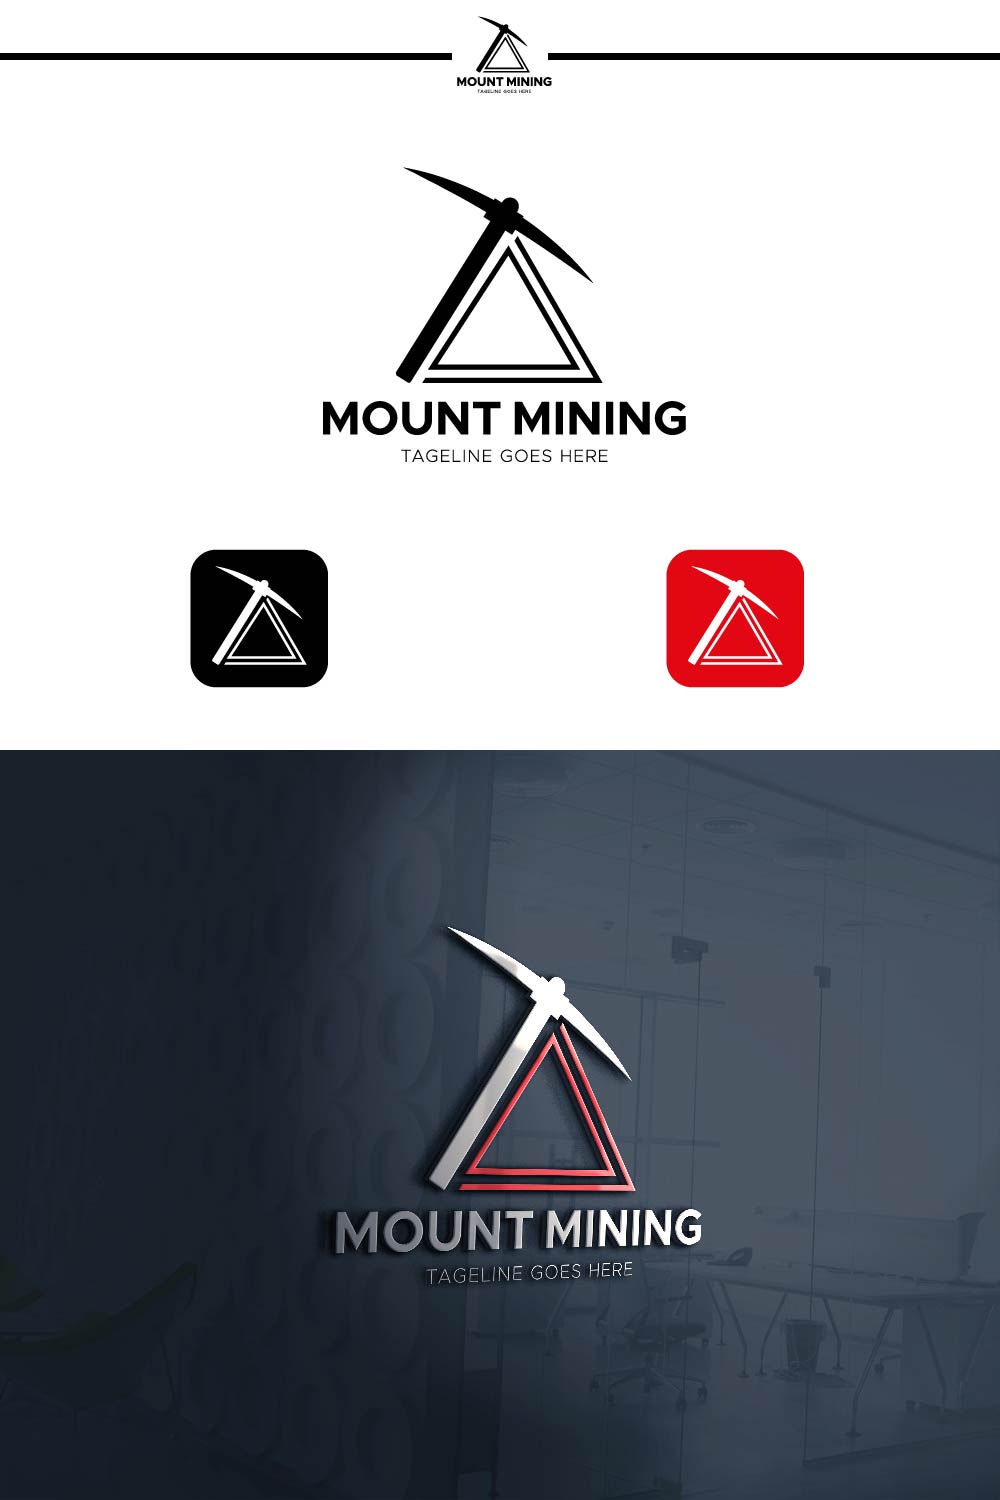 Mount Mining Construction Company Logo Template pinterest image.